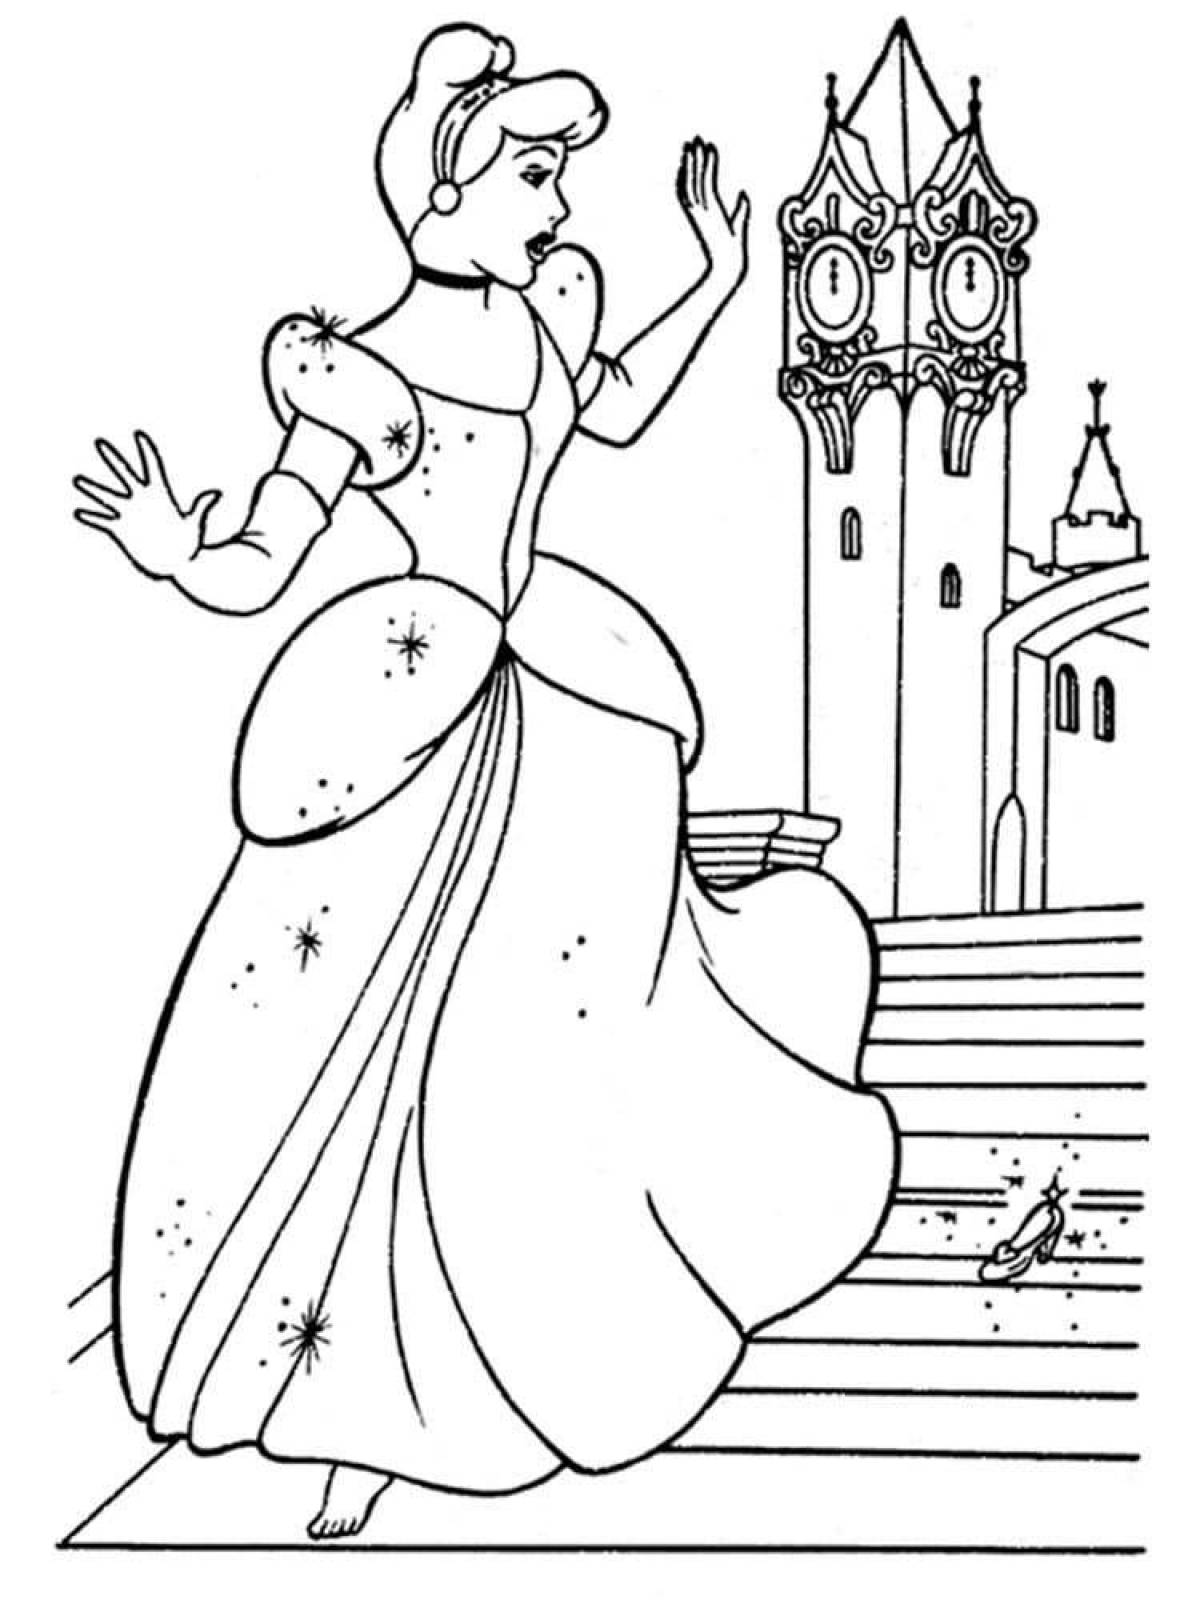 Living Cinderella and Charles Perrault coloring